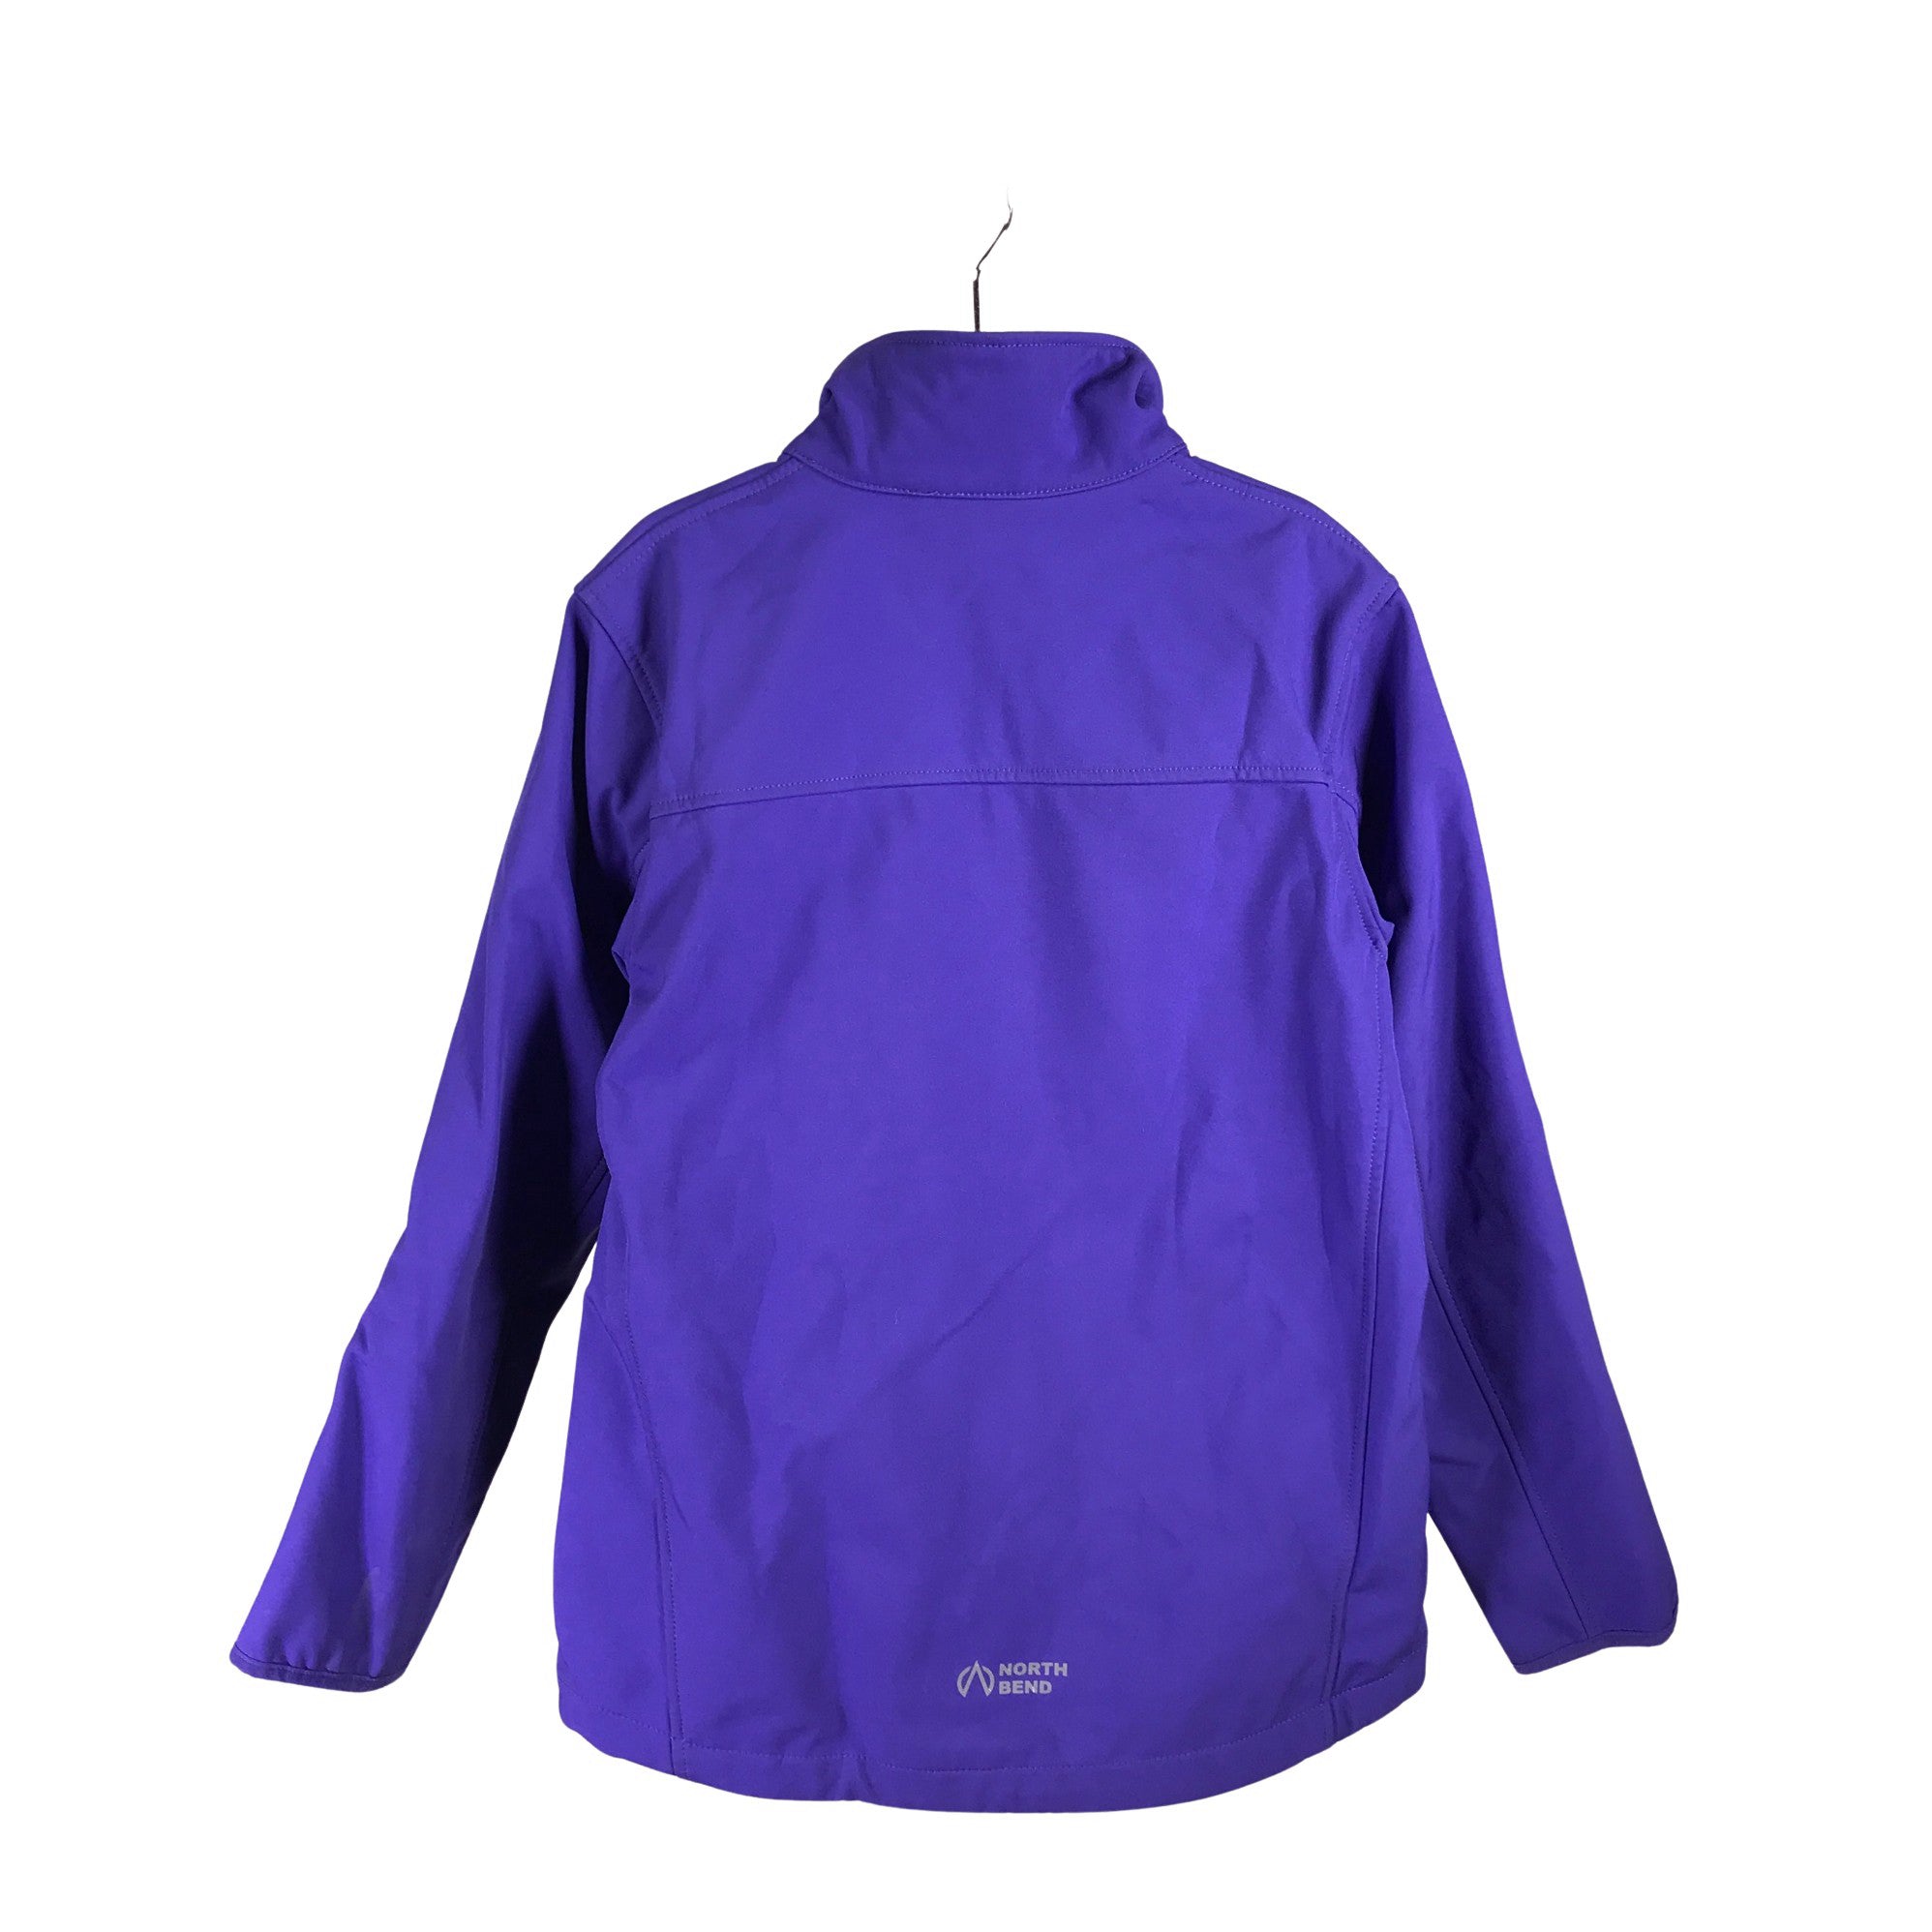 North Bend Soft shell jacket, 134 - 140 (Purple) | Emmy